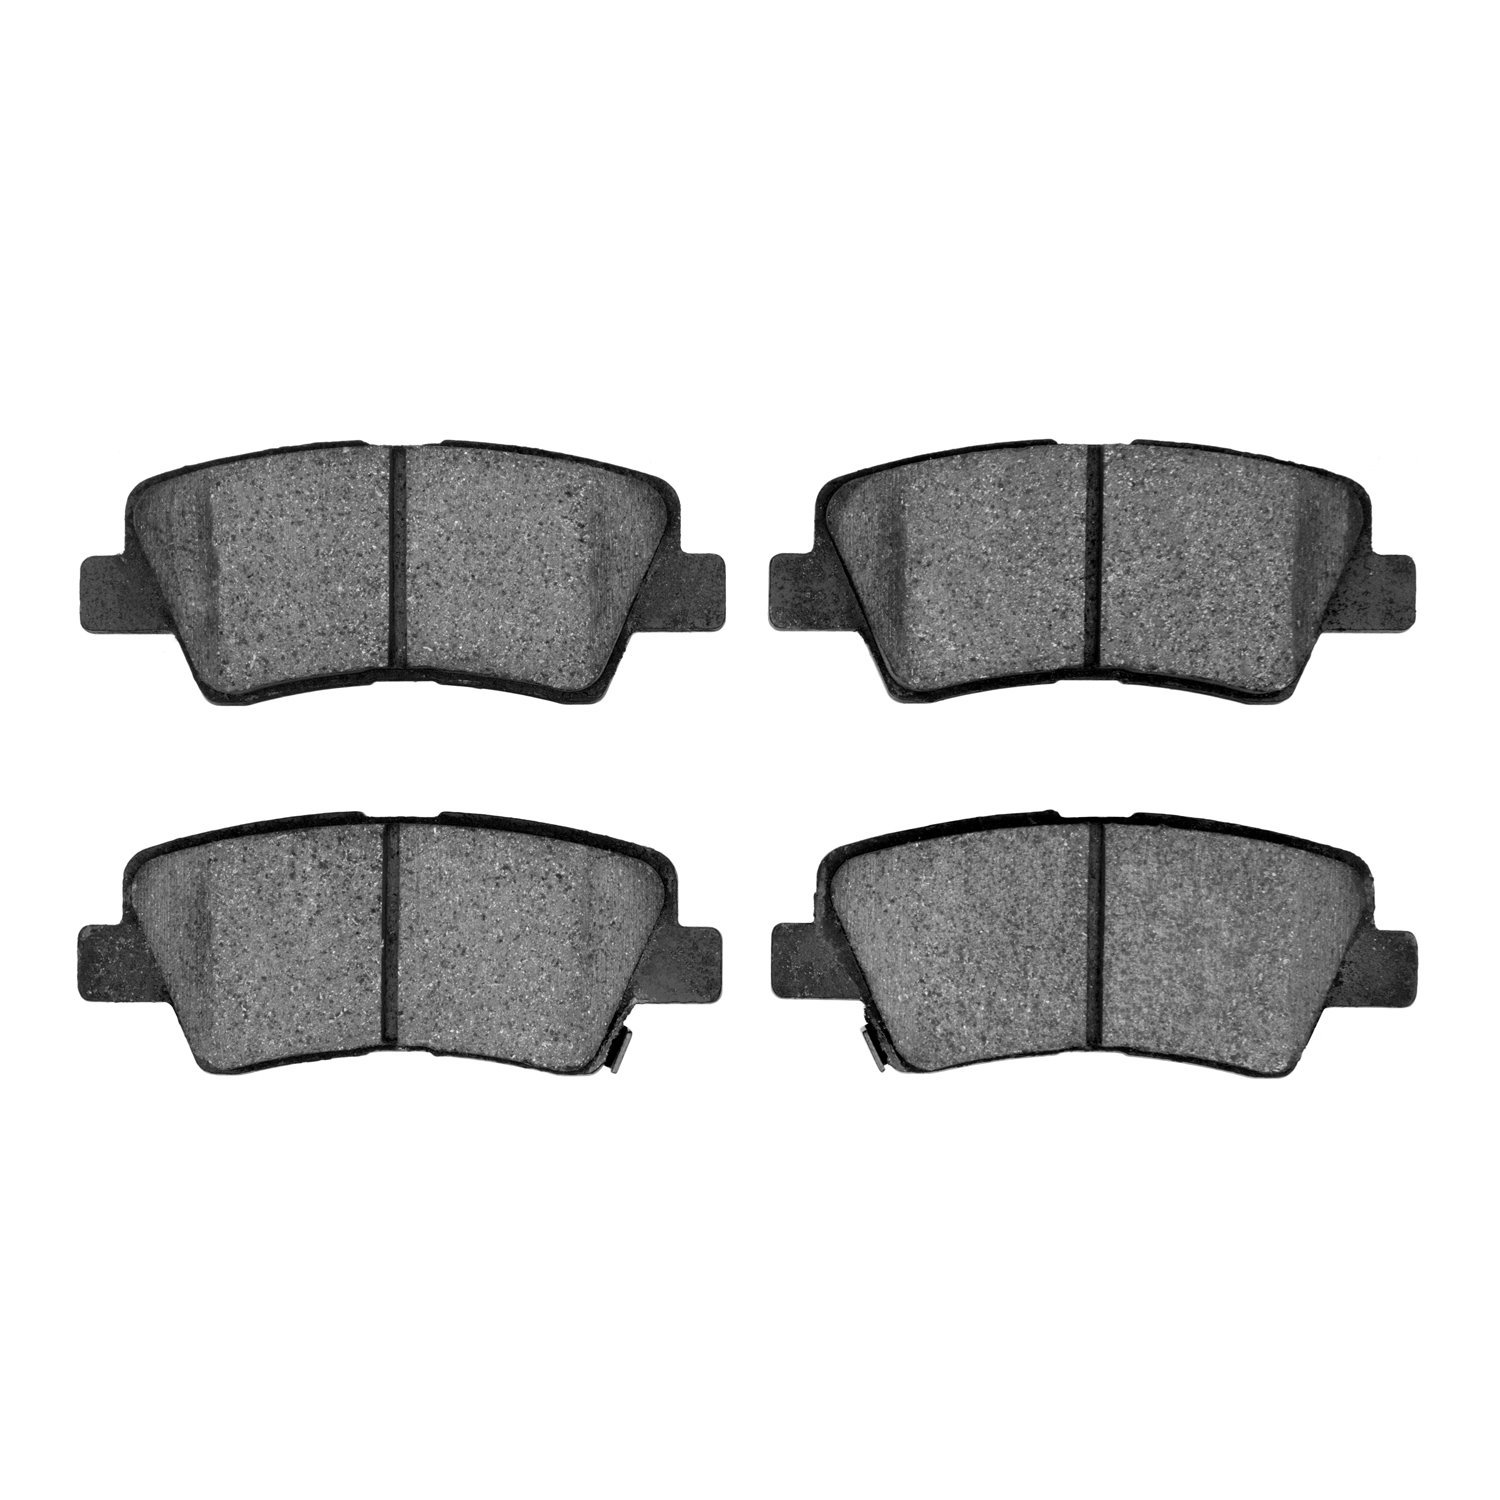 1000-1813-00 Track/Street Low-Metallic Brake Pads Kit, Fits Select Kia/Hyundai/Genesis, Position: Rear